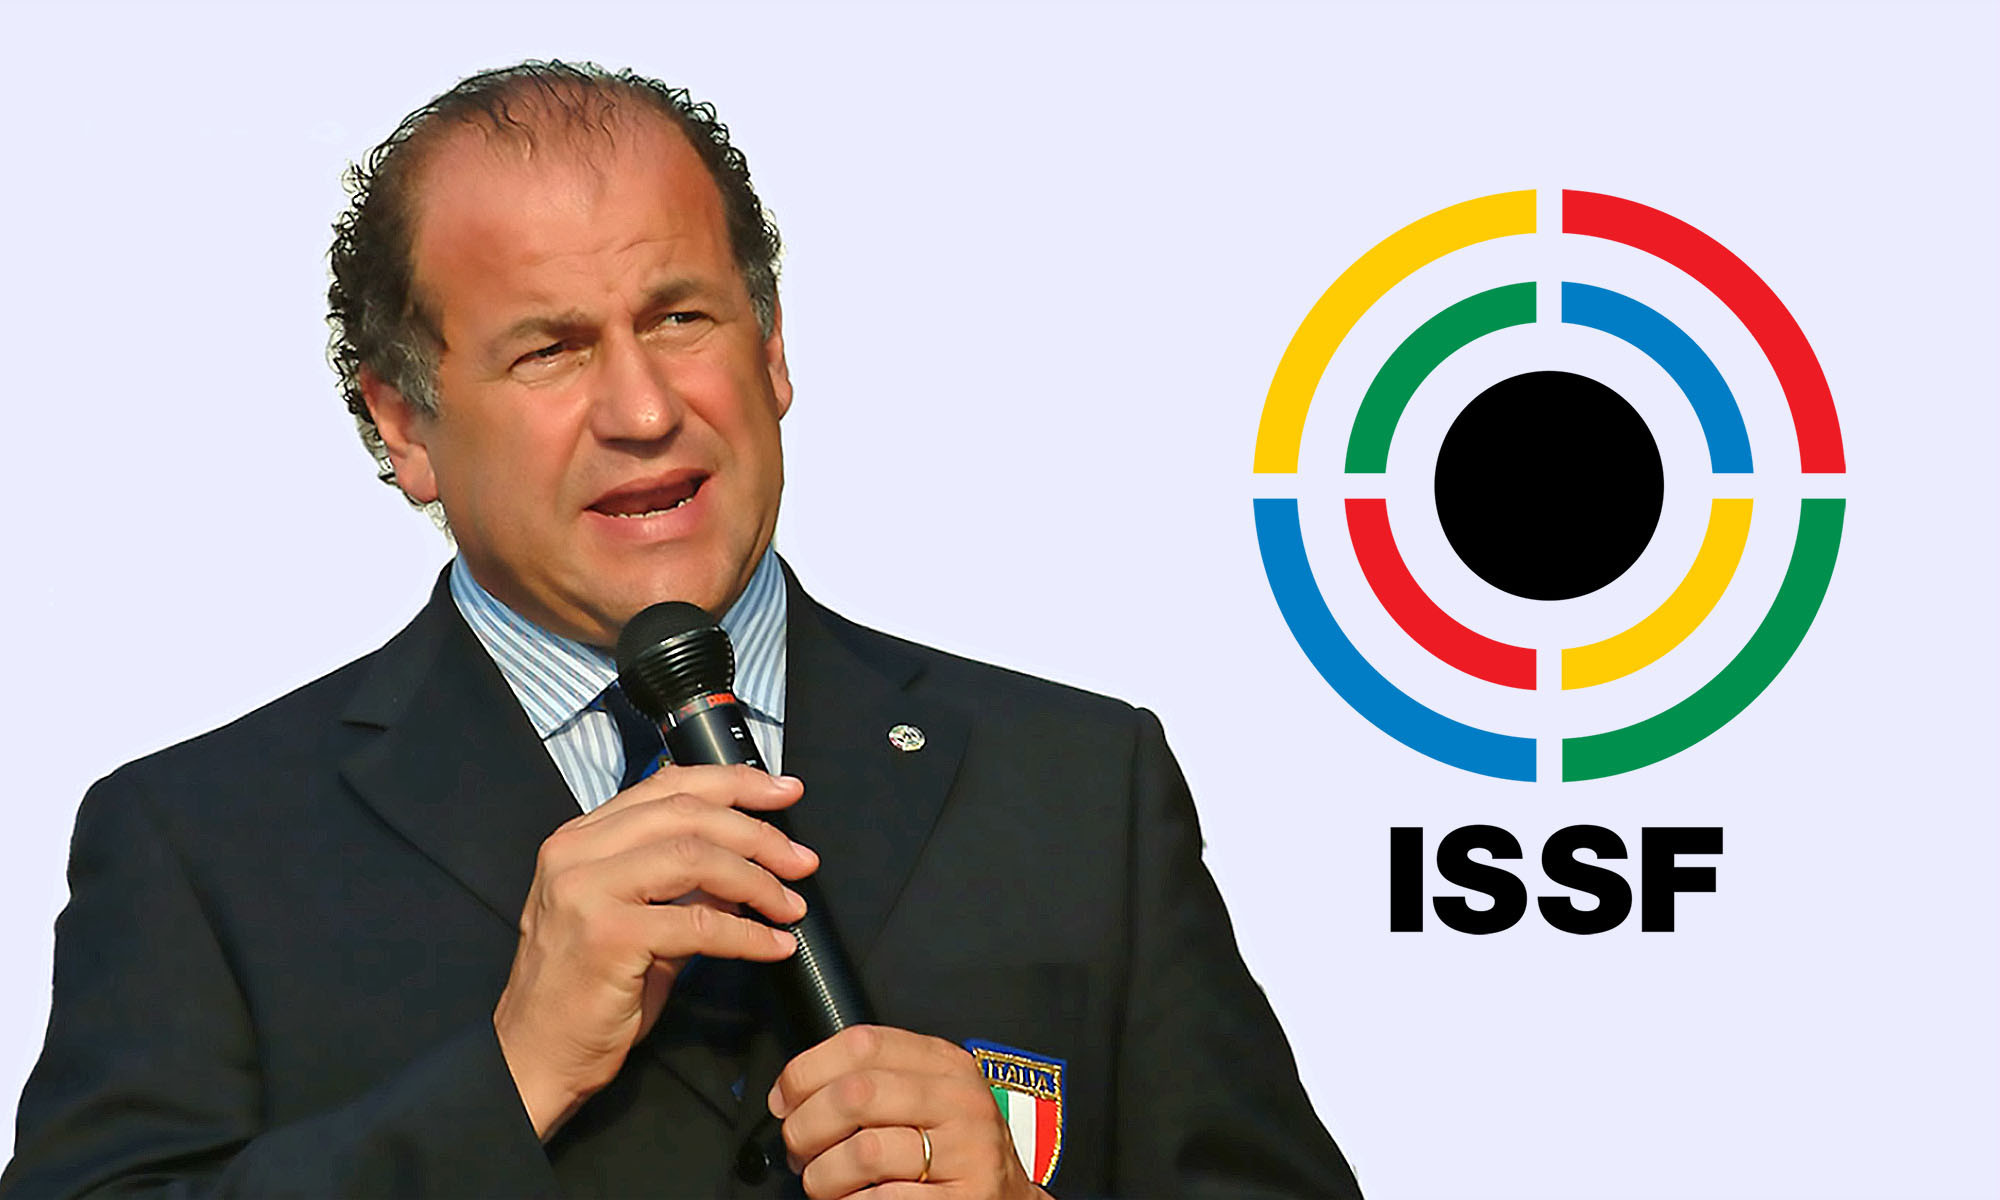 Exclusive: New ISSF President Rossi to meet IOC over Los Angeles 2028 venue arrangements